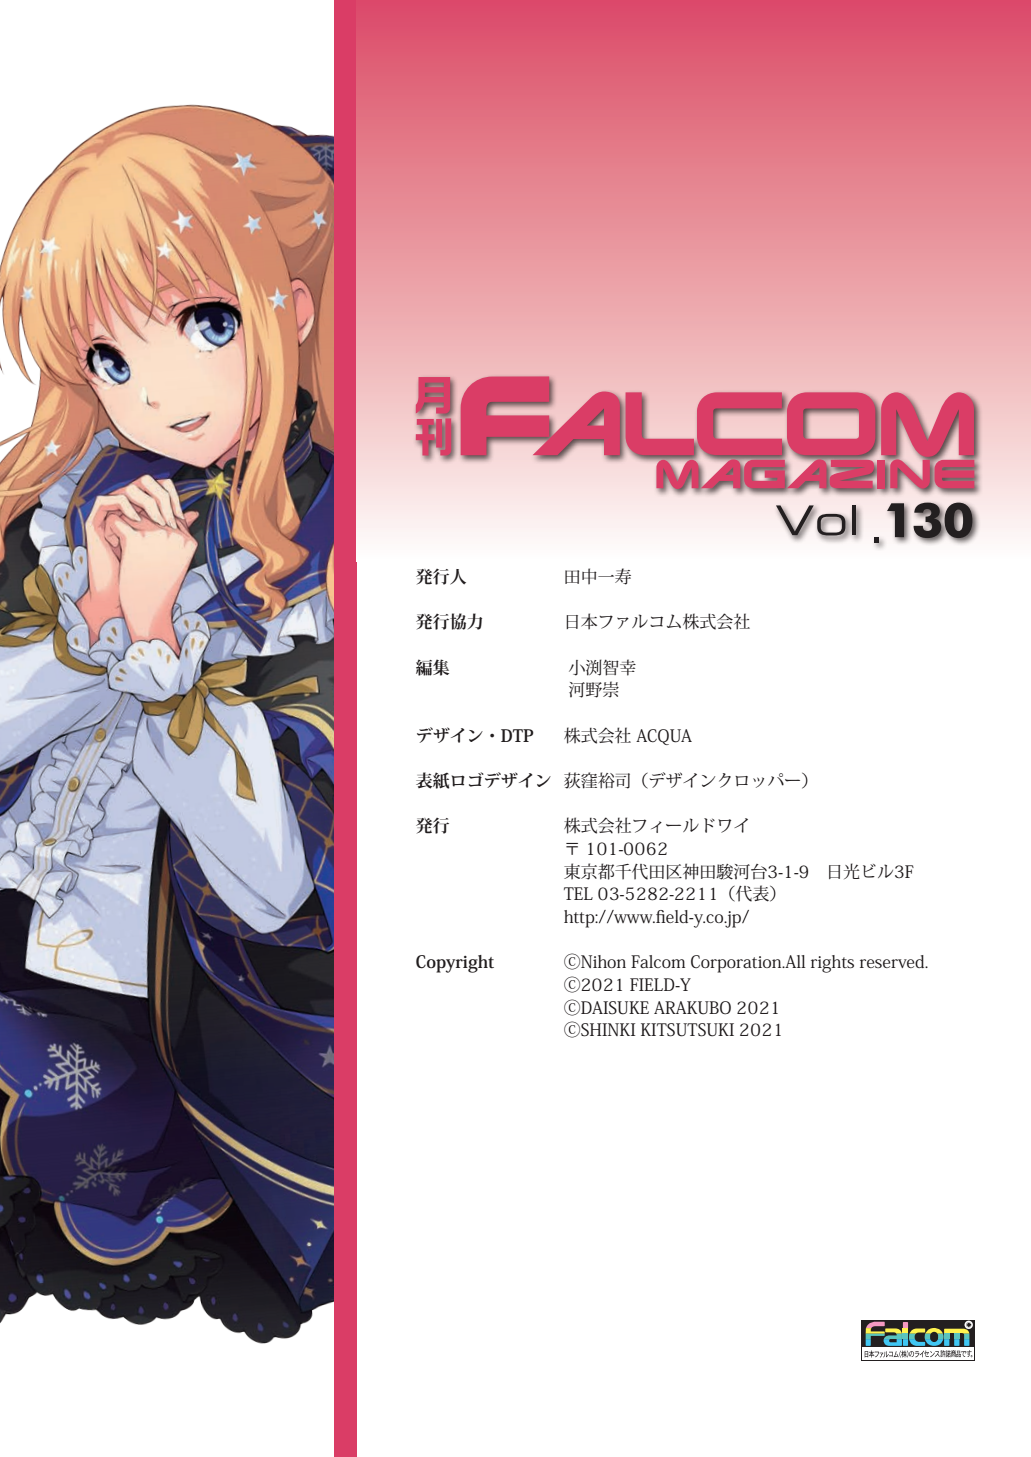 Falcommagazine130-3.png